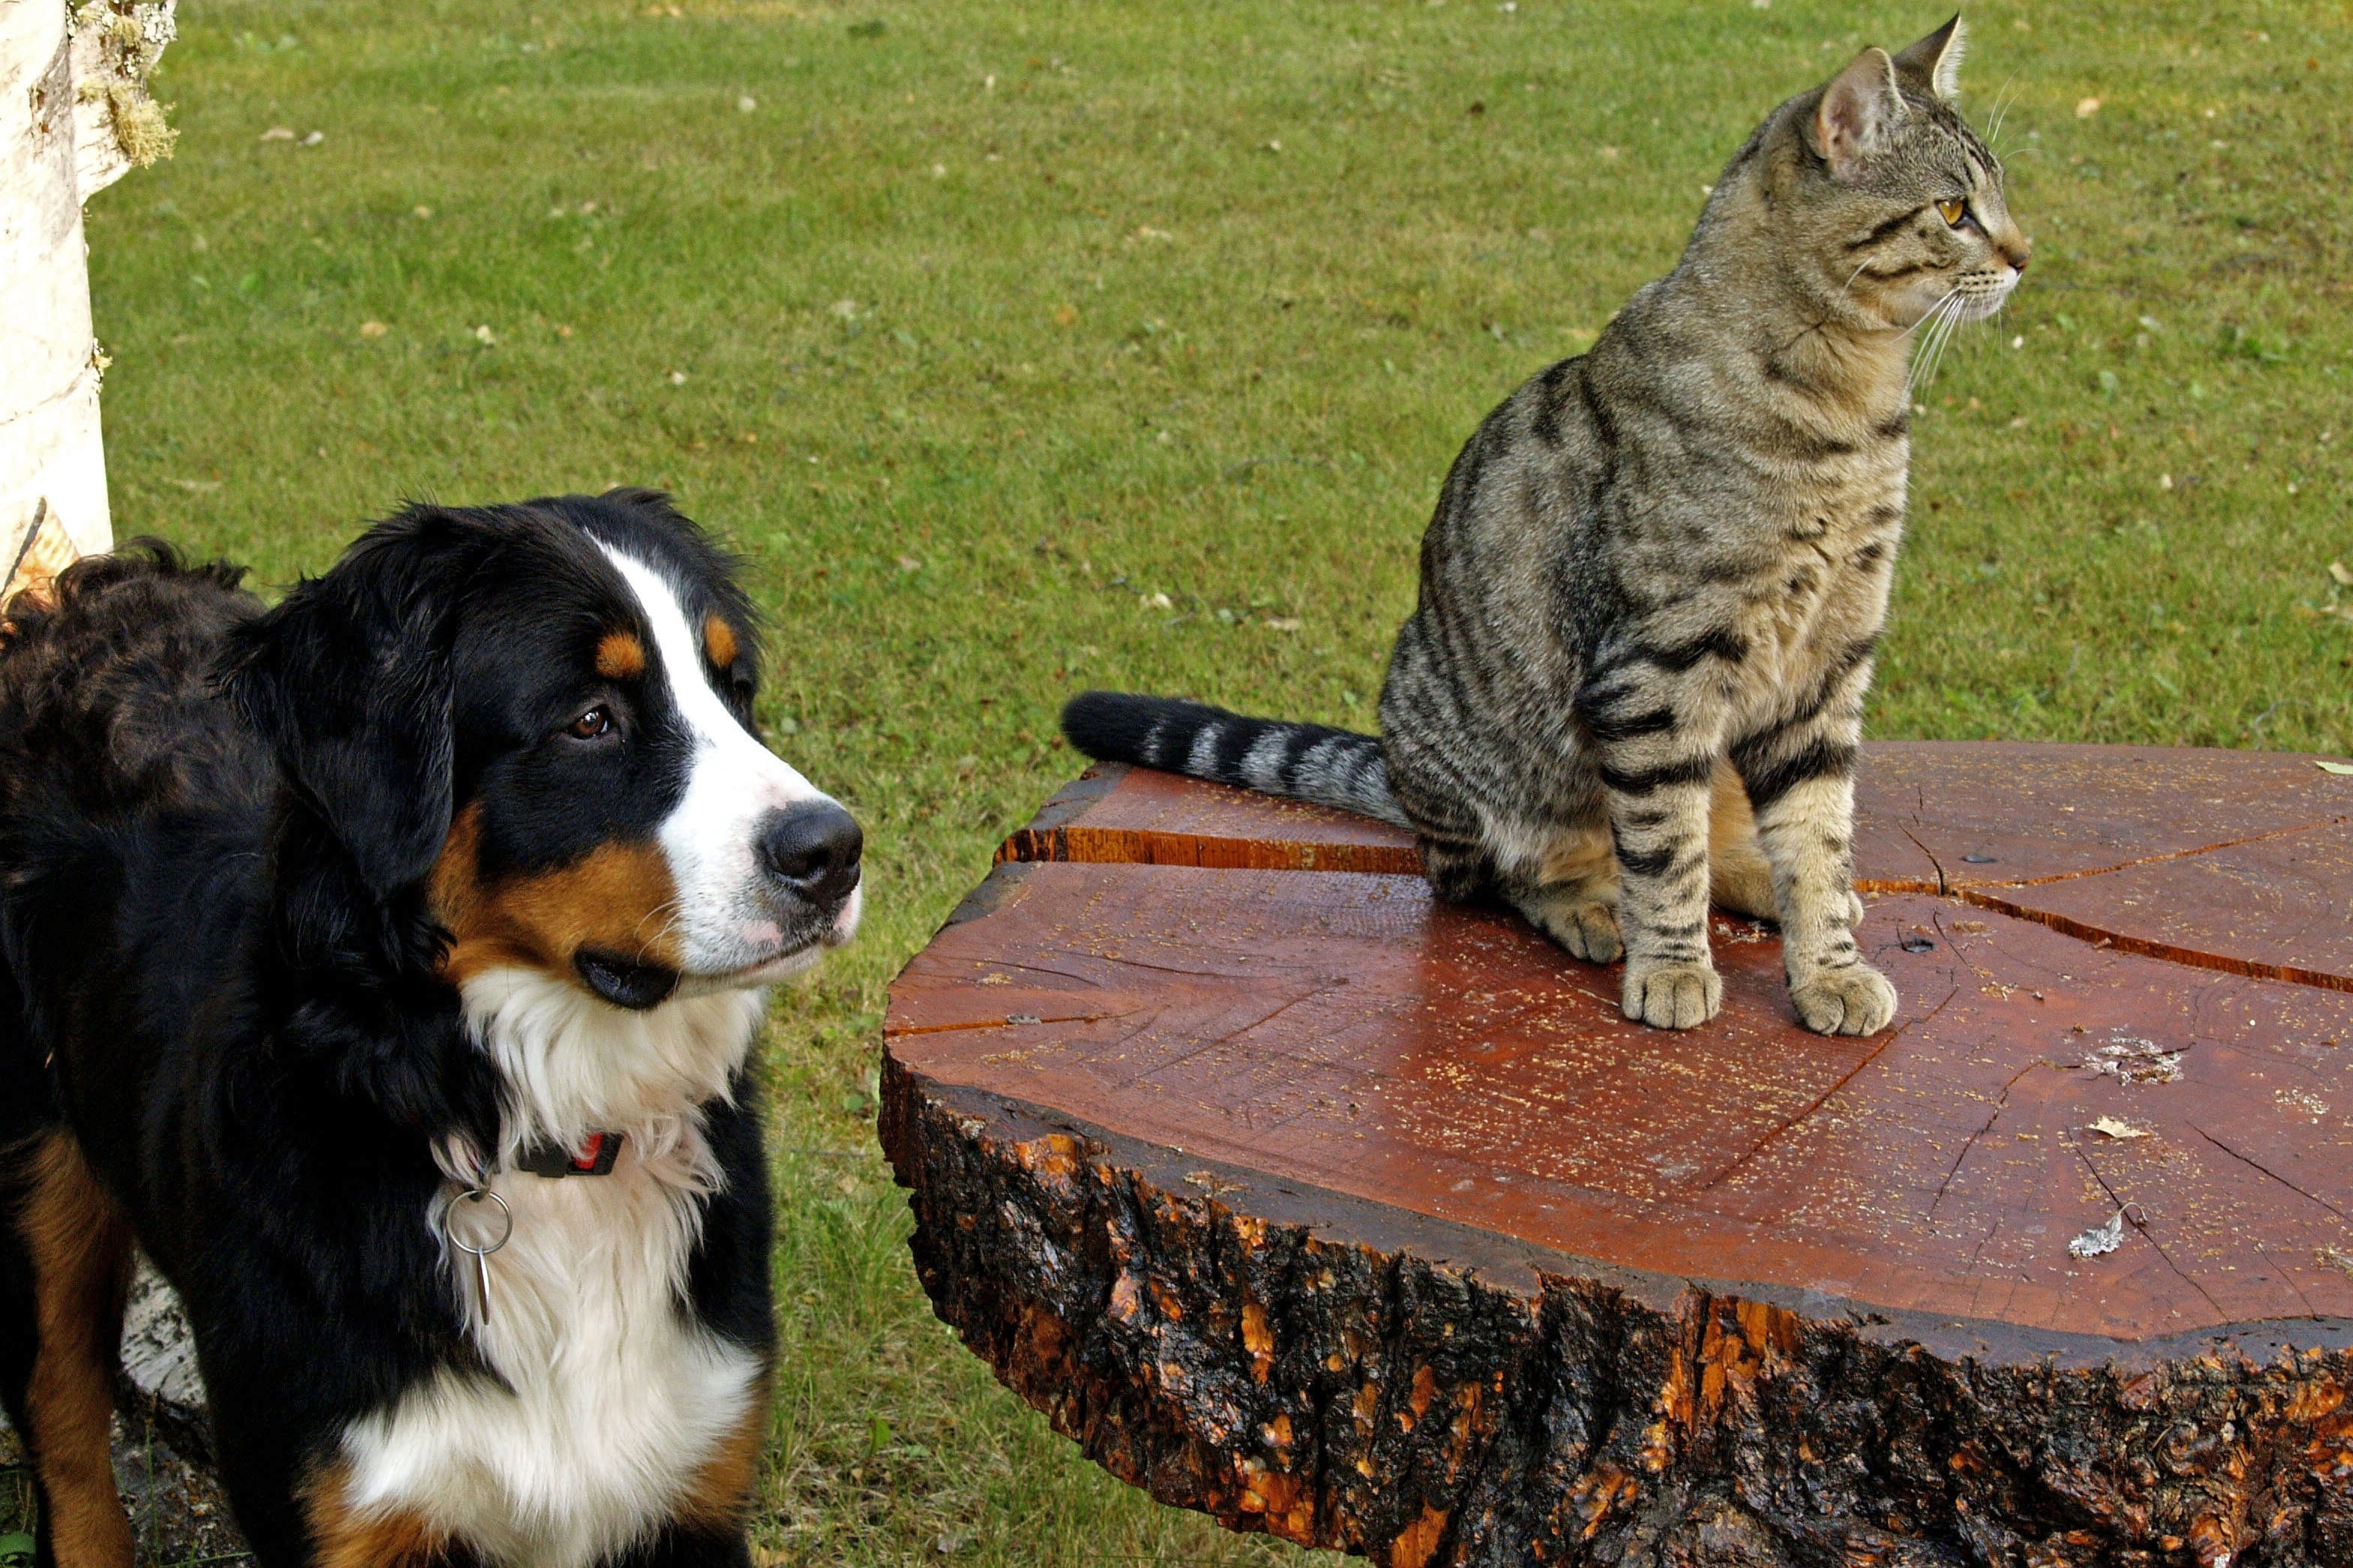 Bernese Mountain Dog, Canine, Tabby, pets, animal themes